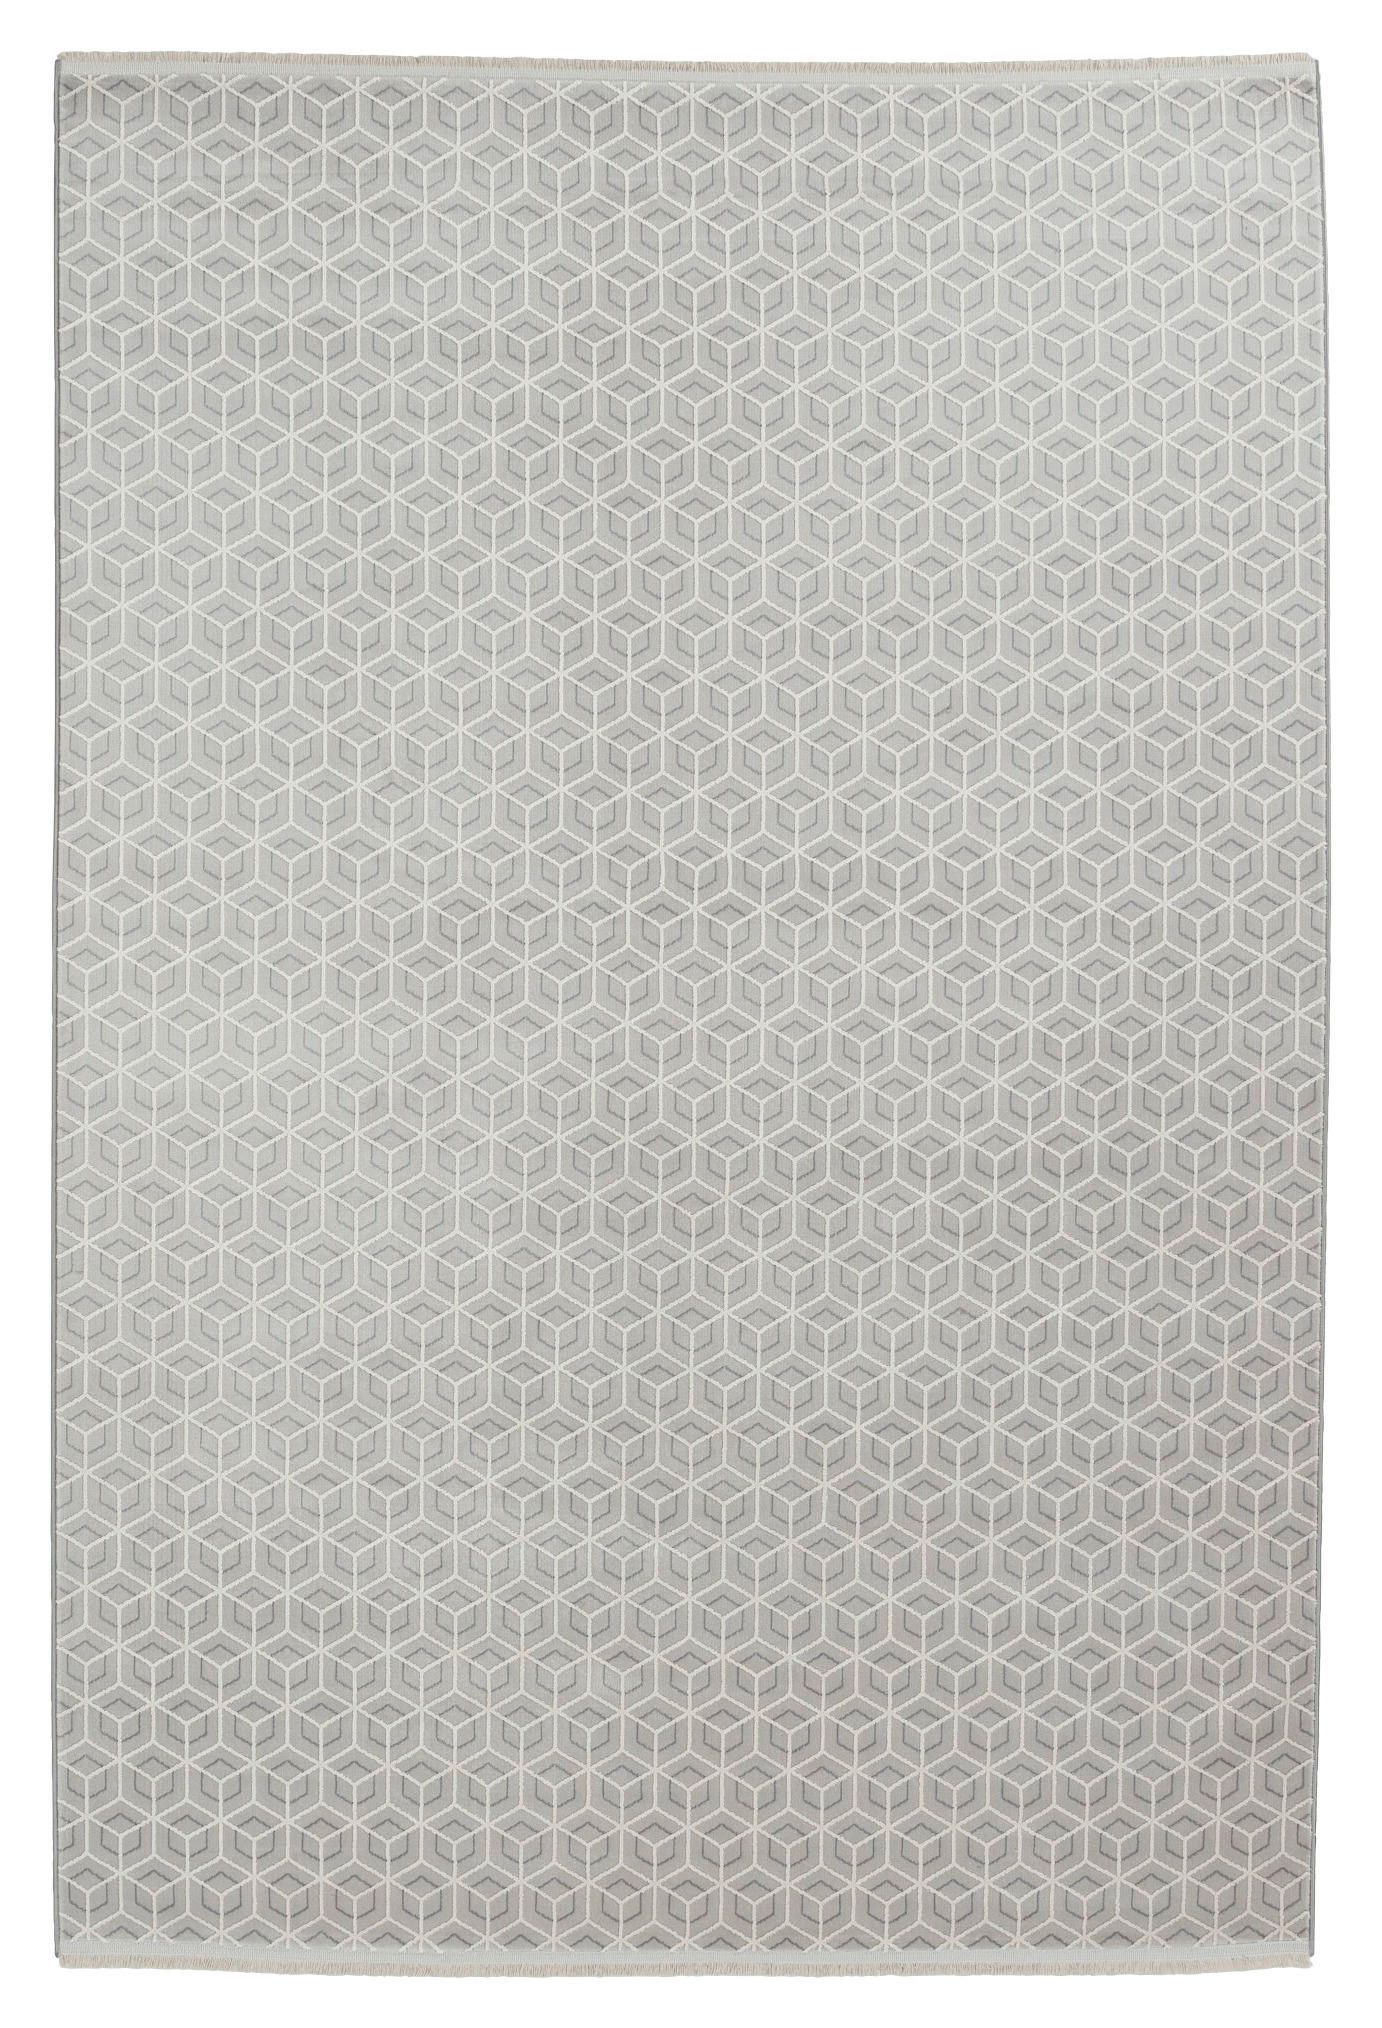 WEBTEPPICH 140/200 cm Metric  - Silberfarben, Design, Textil (140/200cm) - Joop!